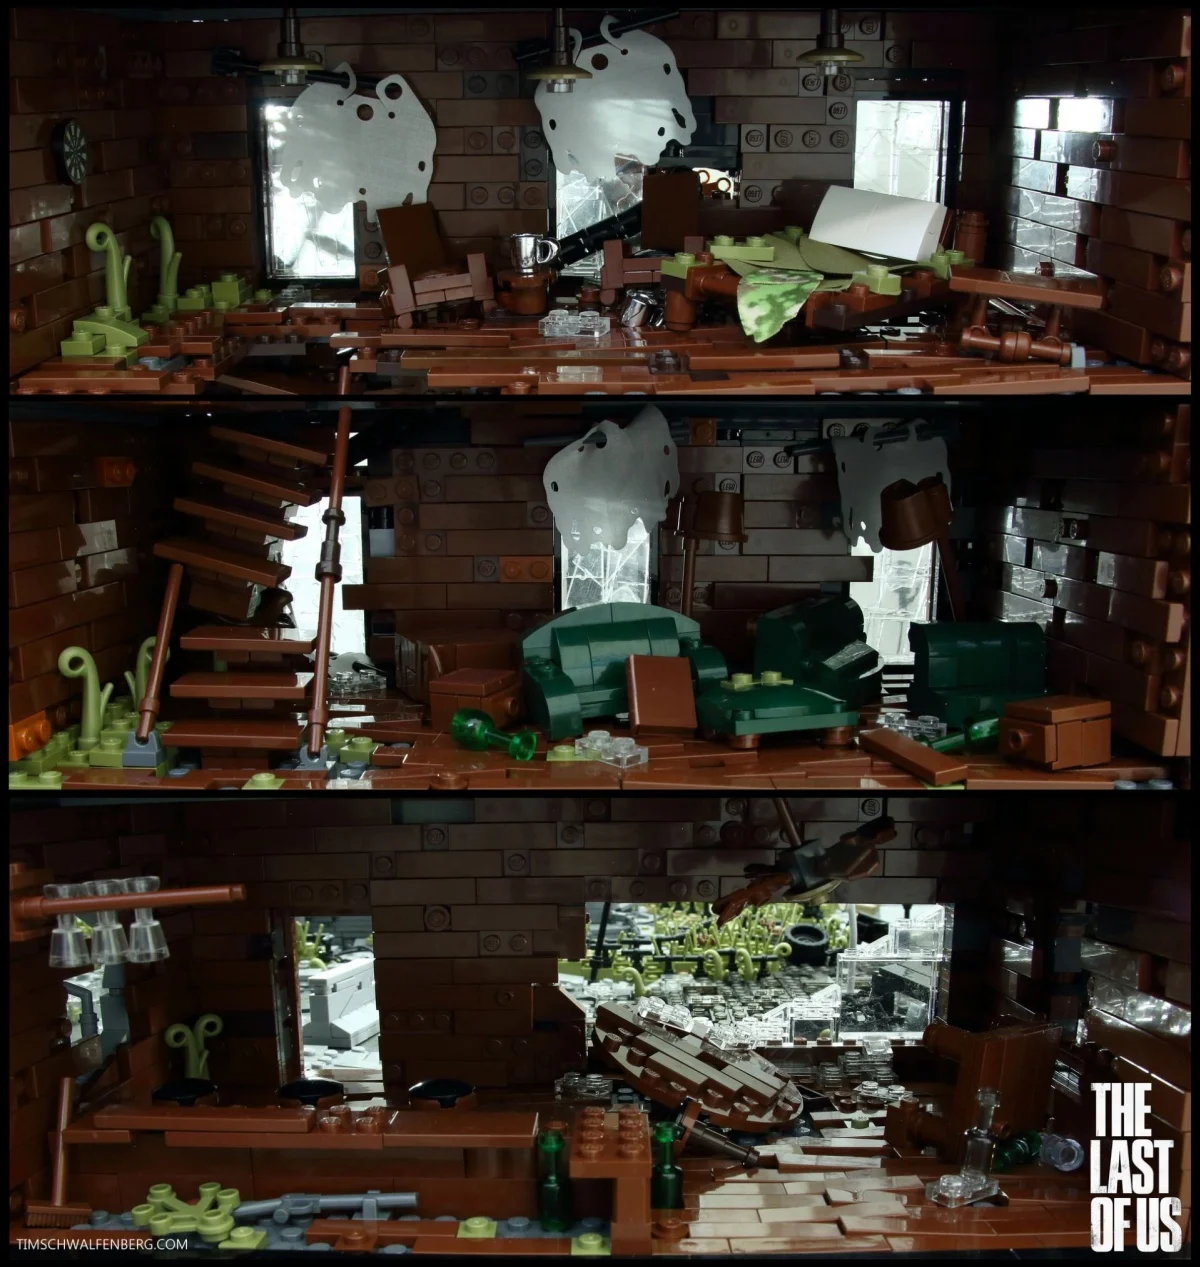 The Last of Us выстроили из LEGO - фото 3